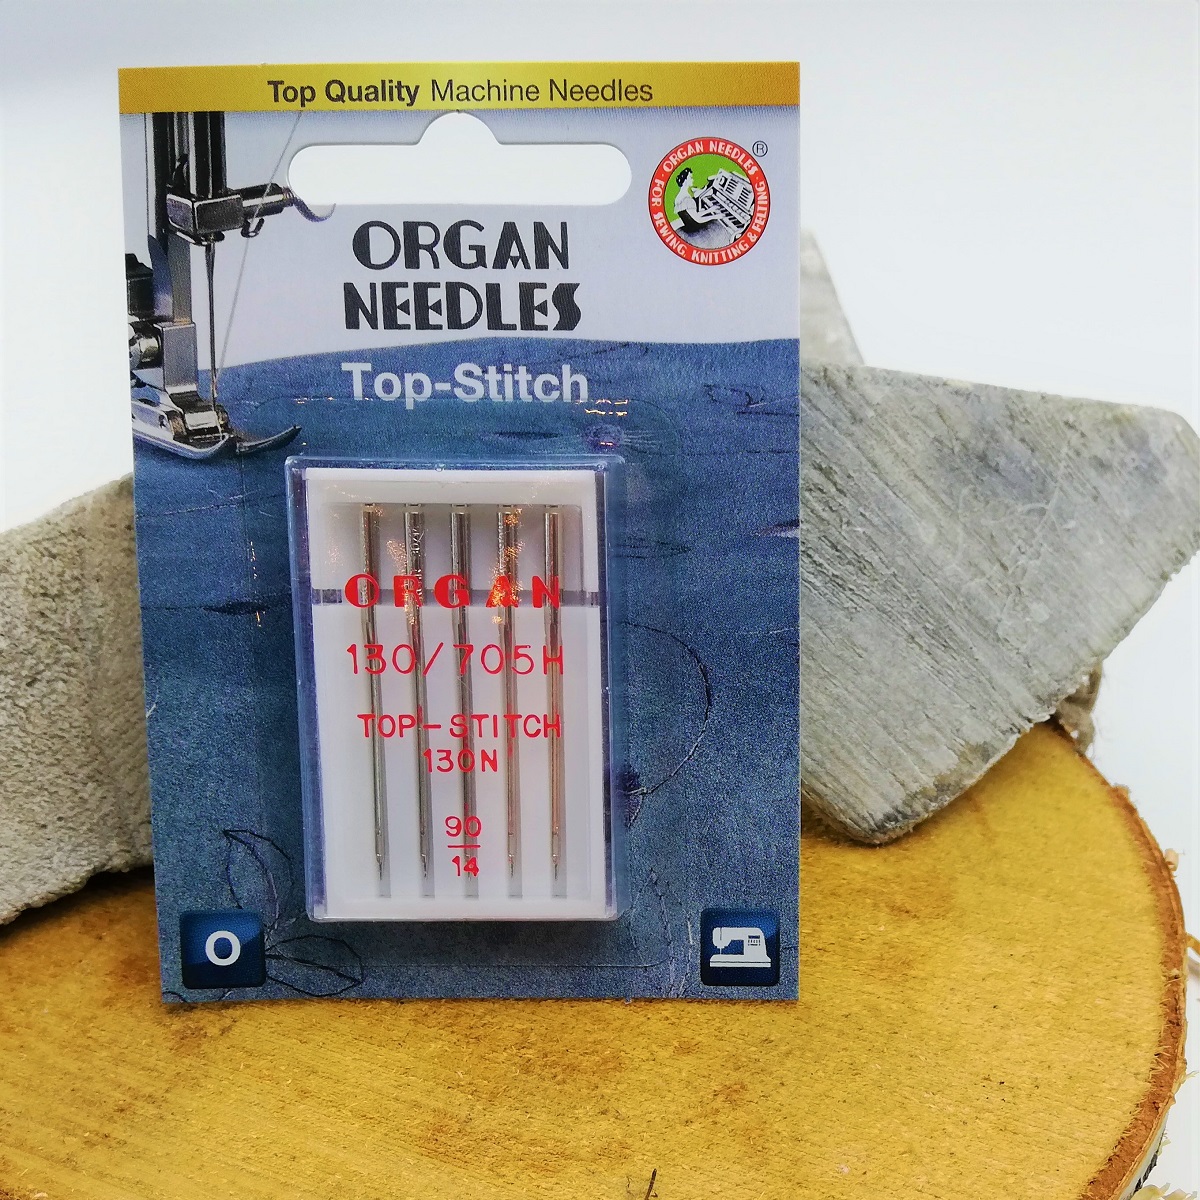 Organ Needles Organ 130/705 H Top Stitch a5 st. 080 Blister